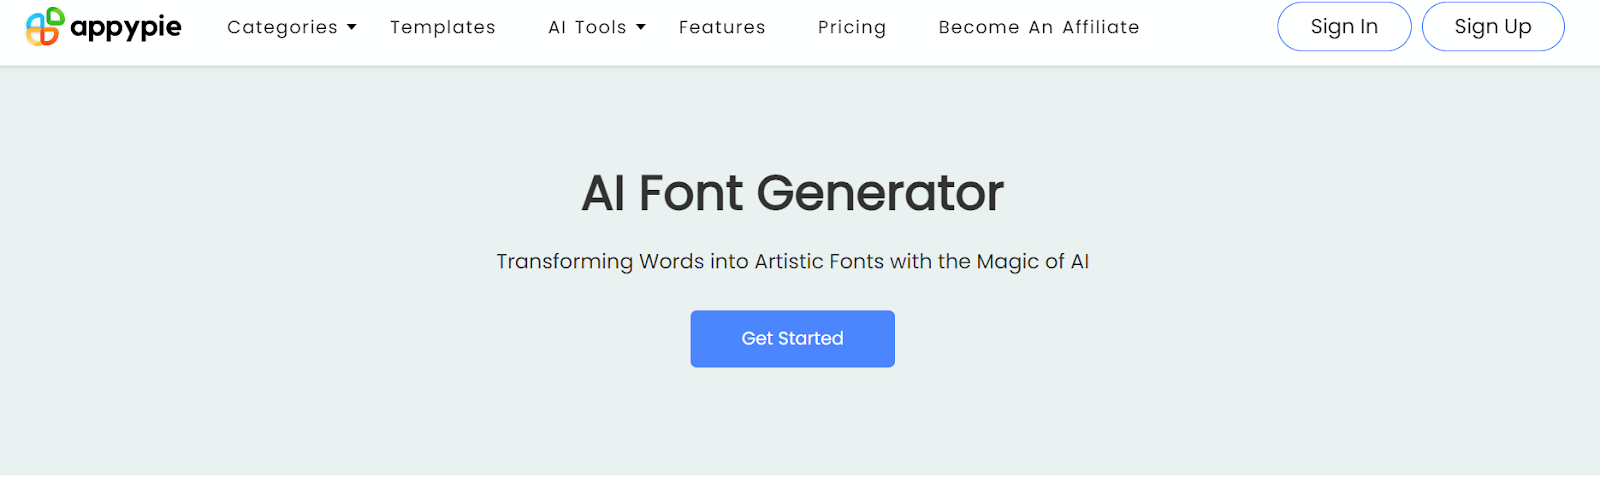 Appy Pie's AI Font Generator